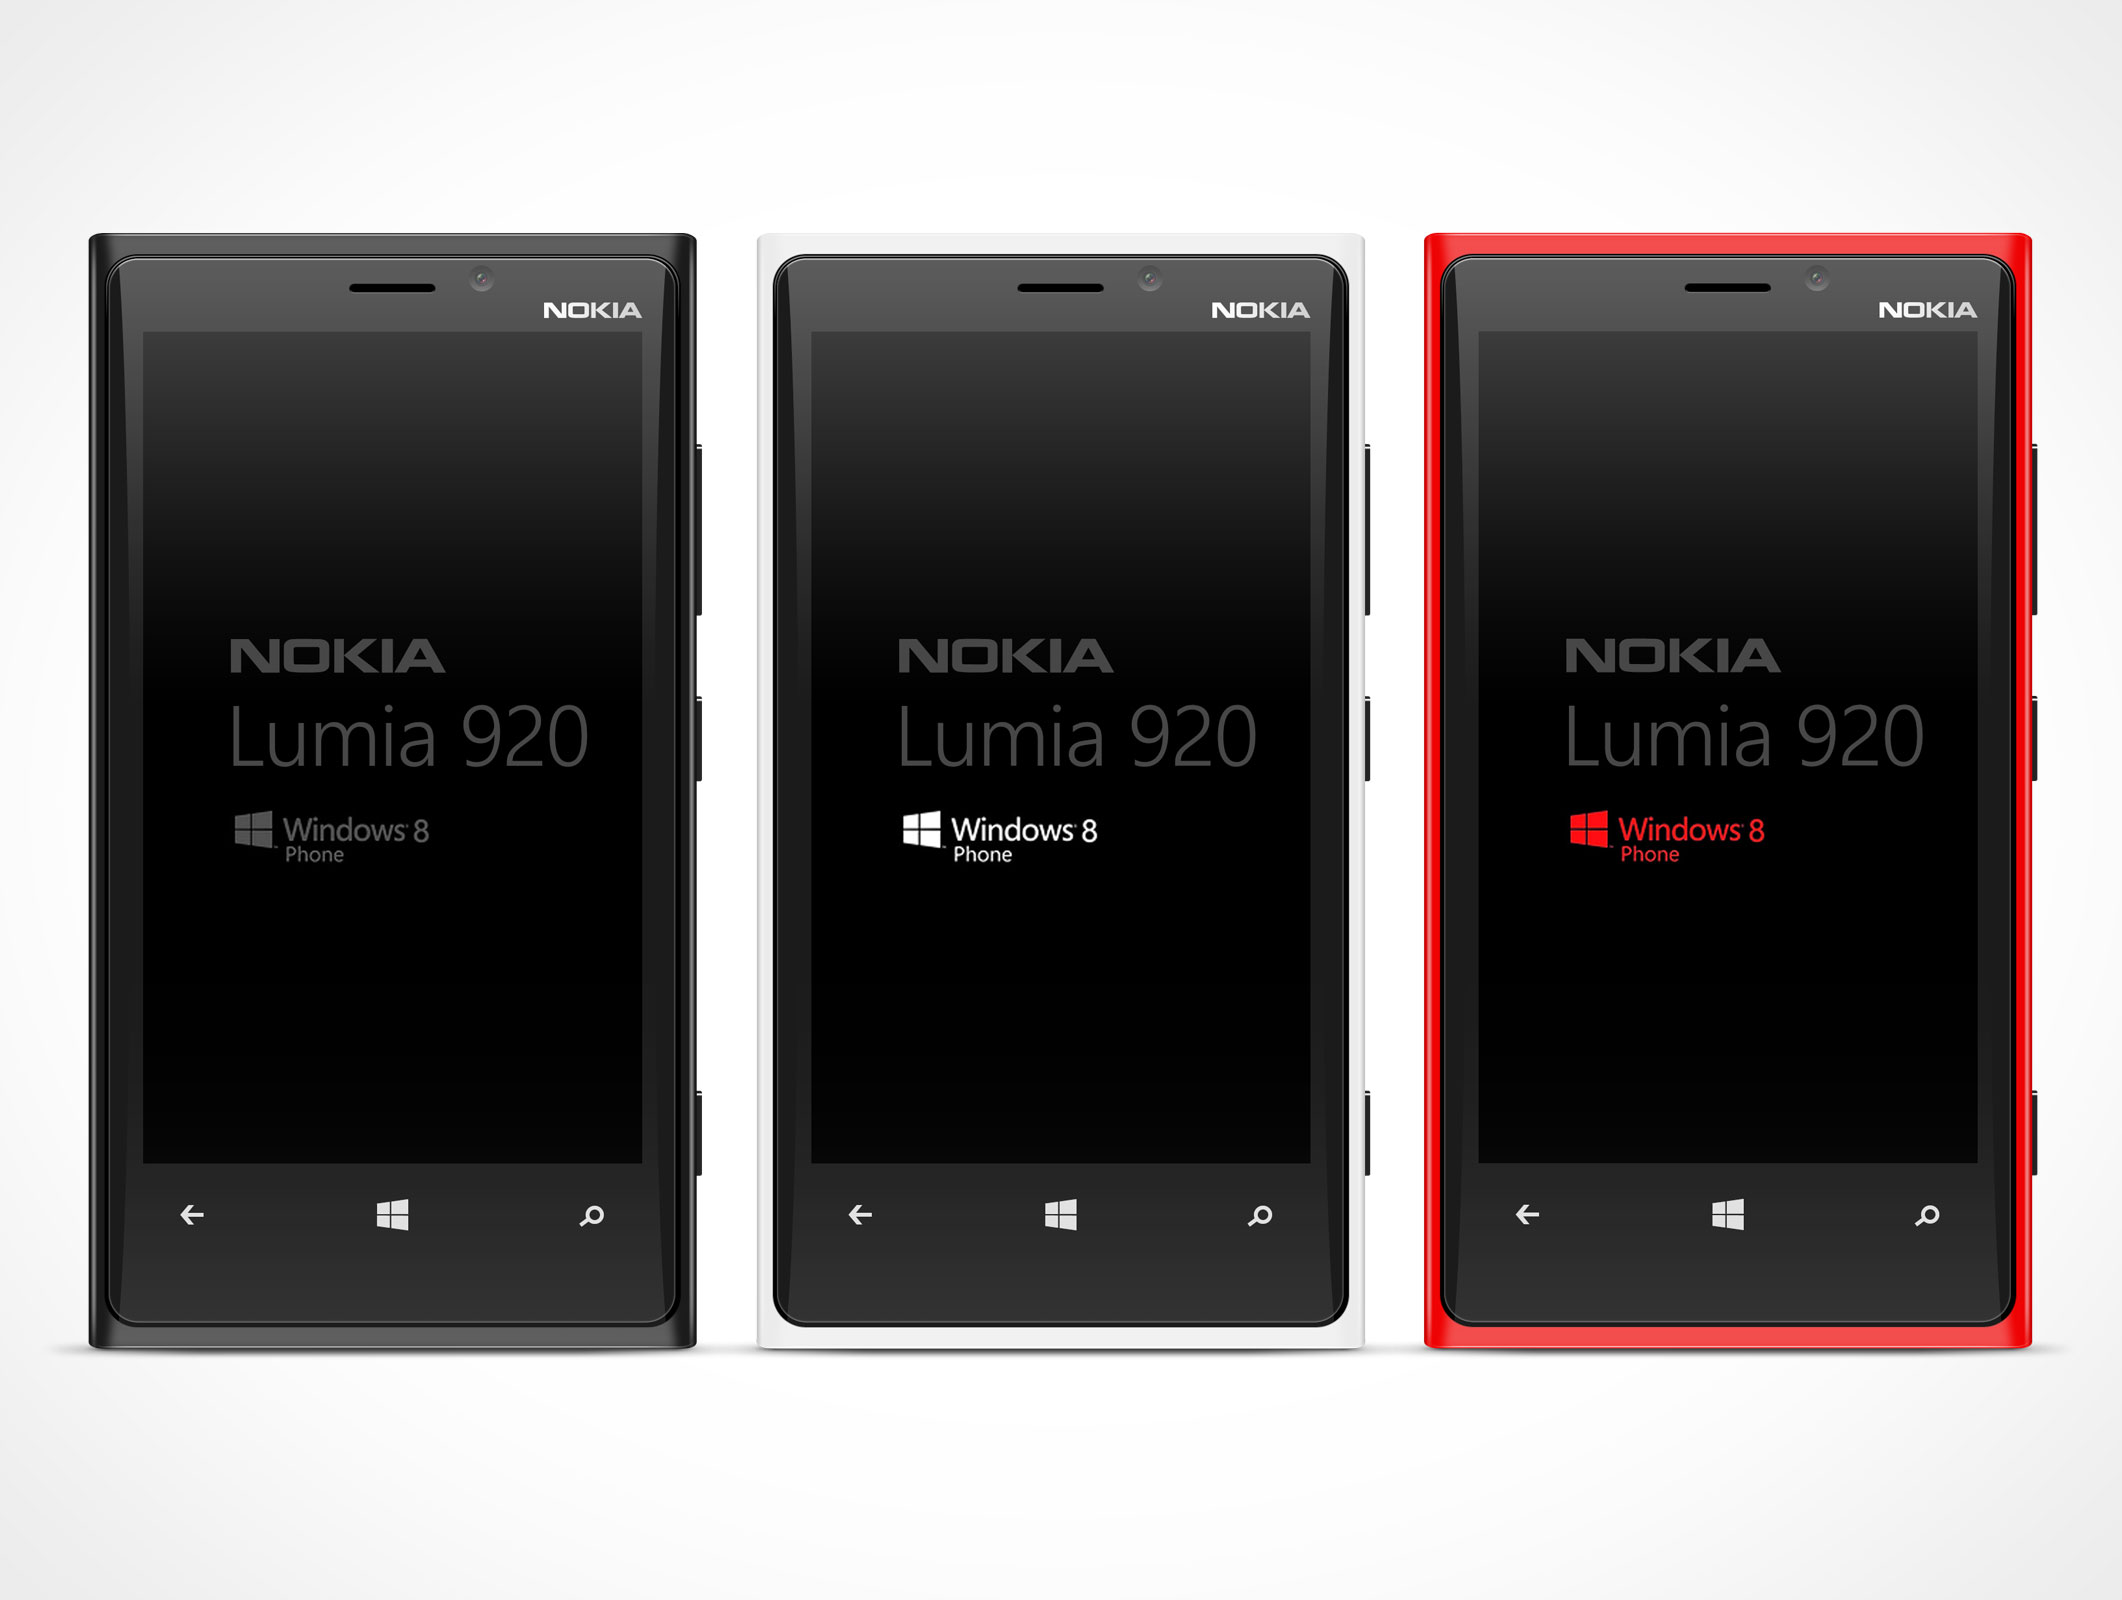 NOKIA Lumina PSD Mockup Template Windows Metro Smartphone